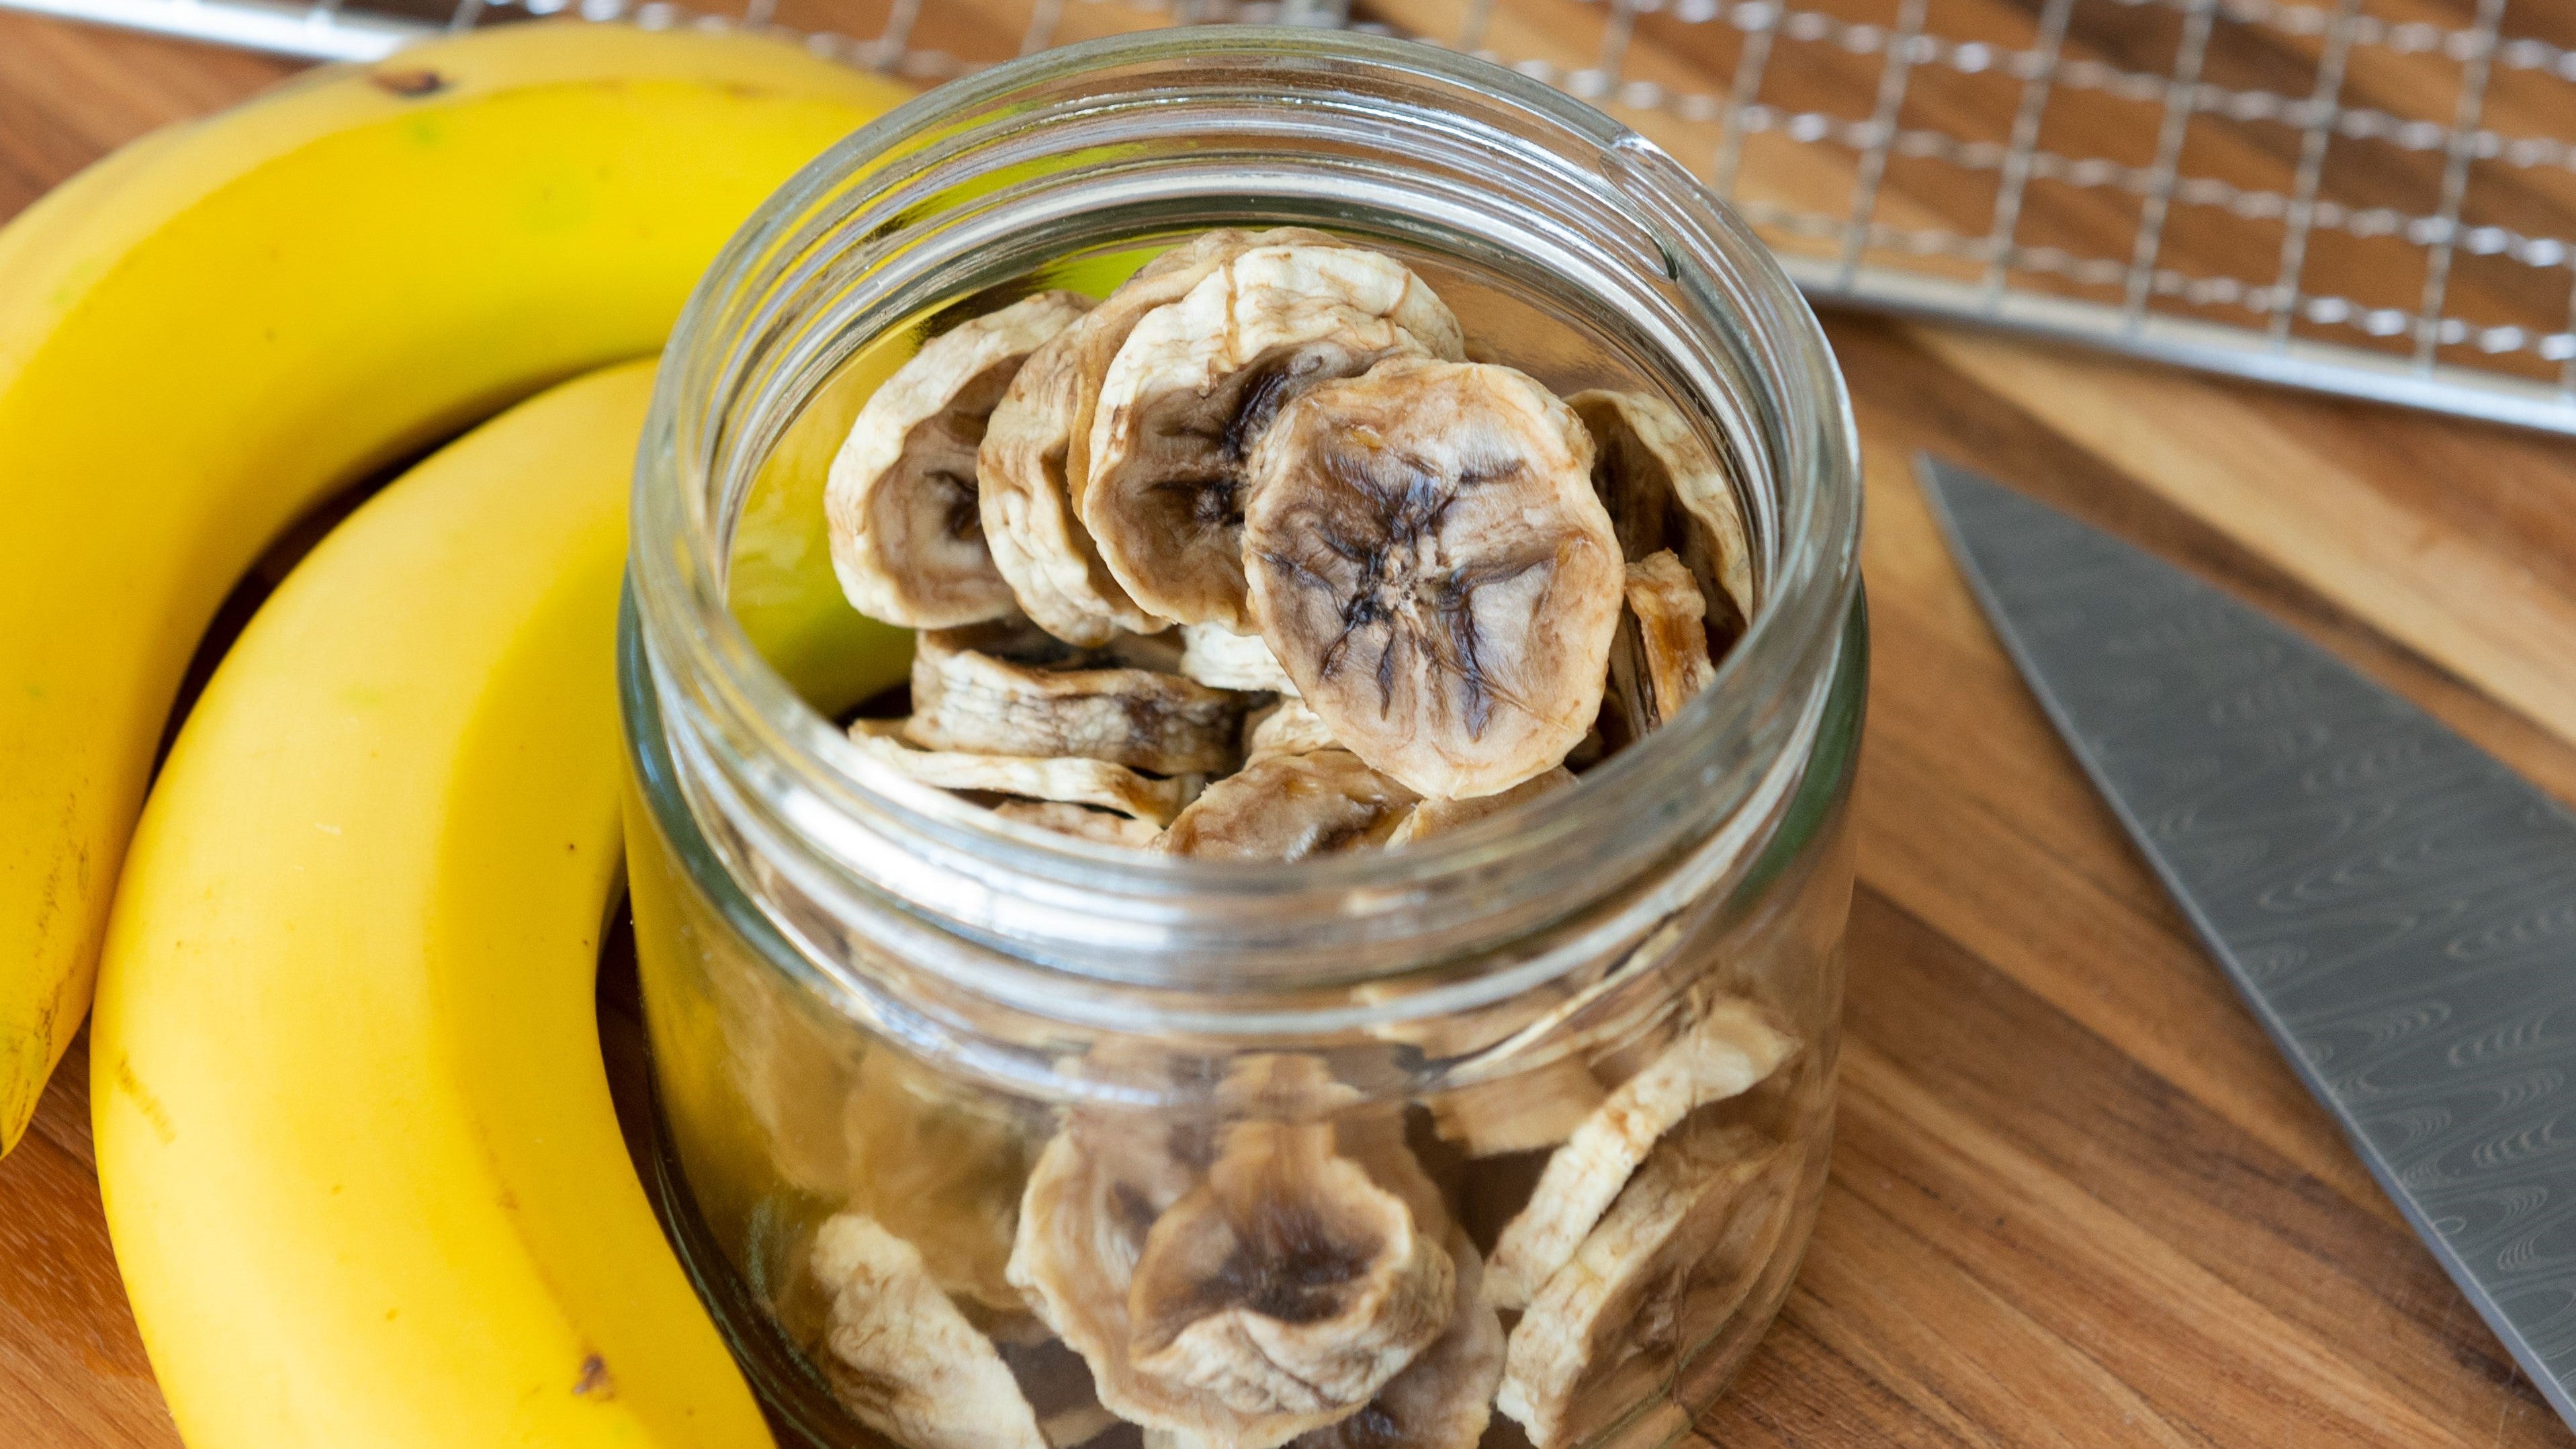 Jar of dried candy banana medallions